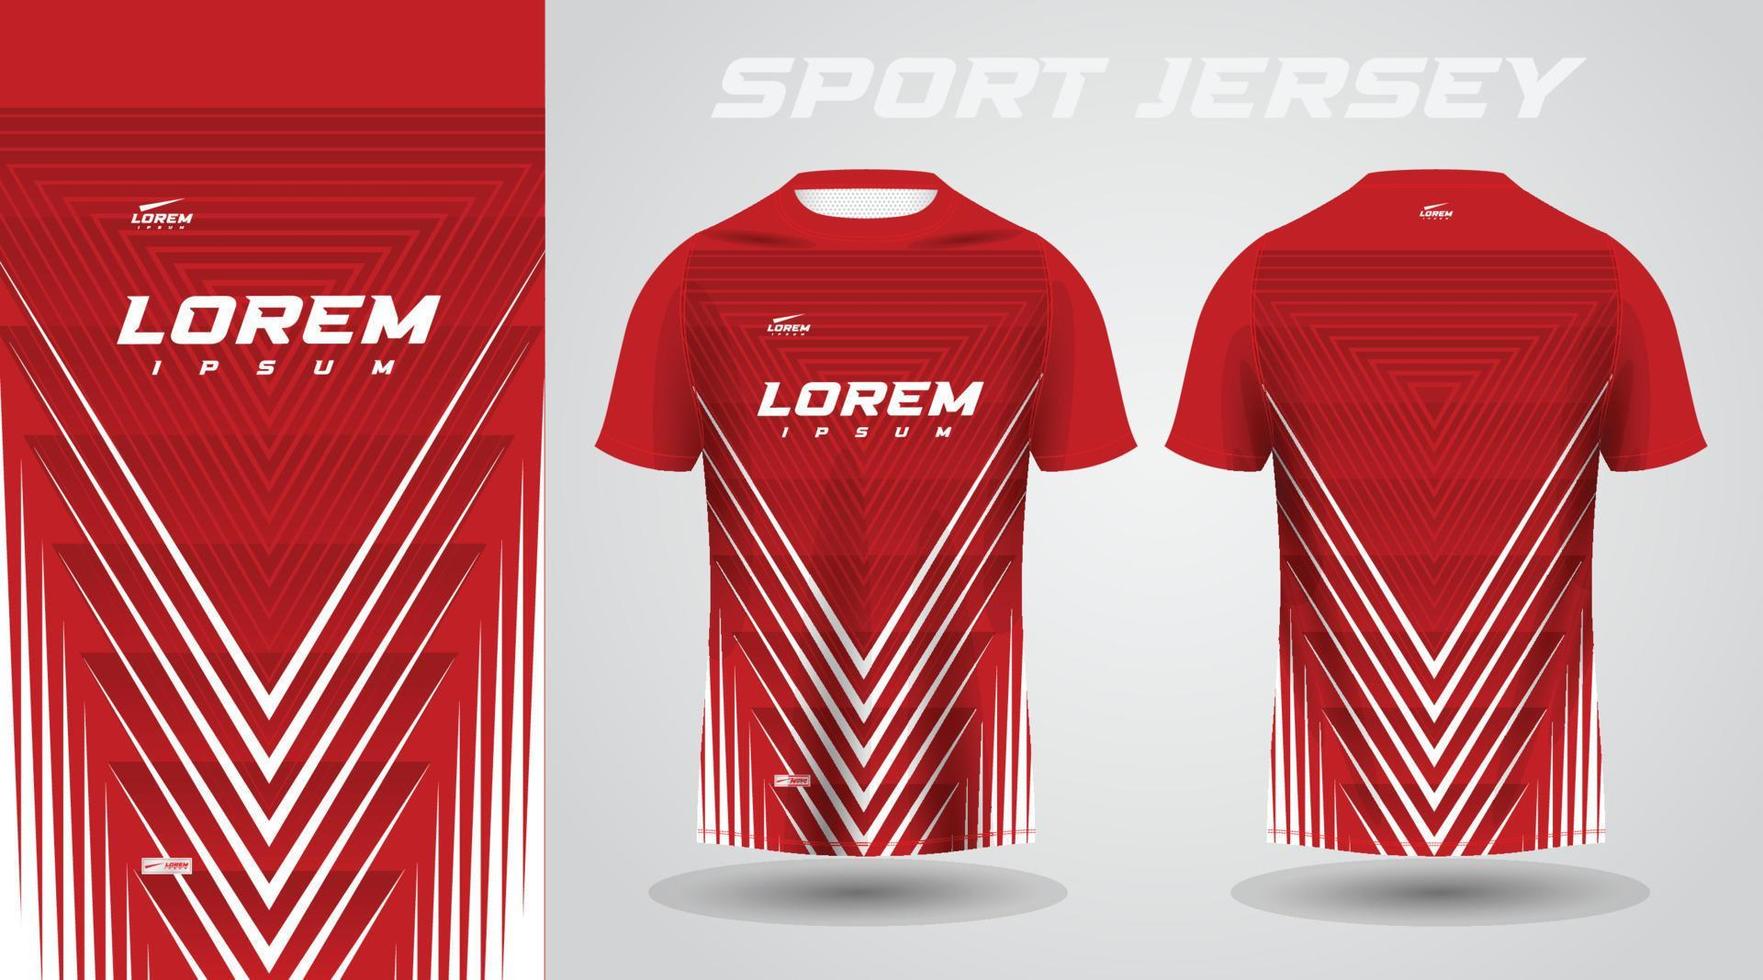 rot Hemd Fußball Fußball Sport Jersey Vorlage Design Attrappe, Lehrmodell, Simulation vektor